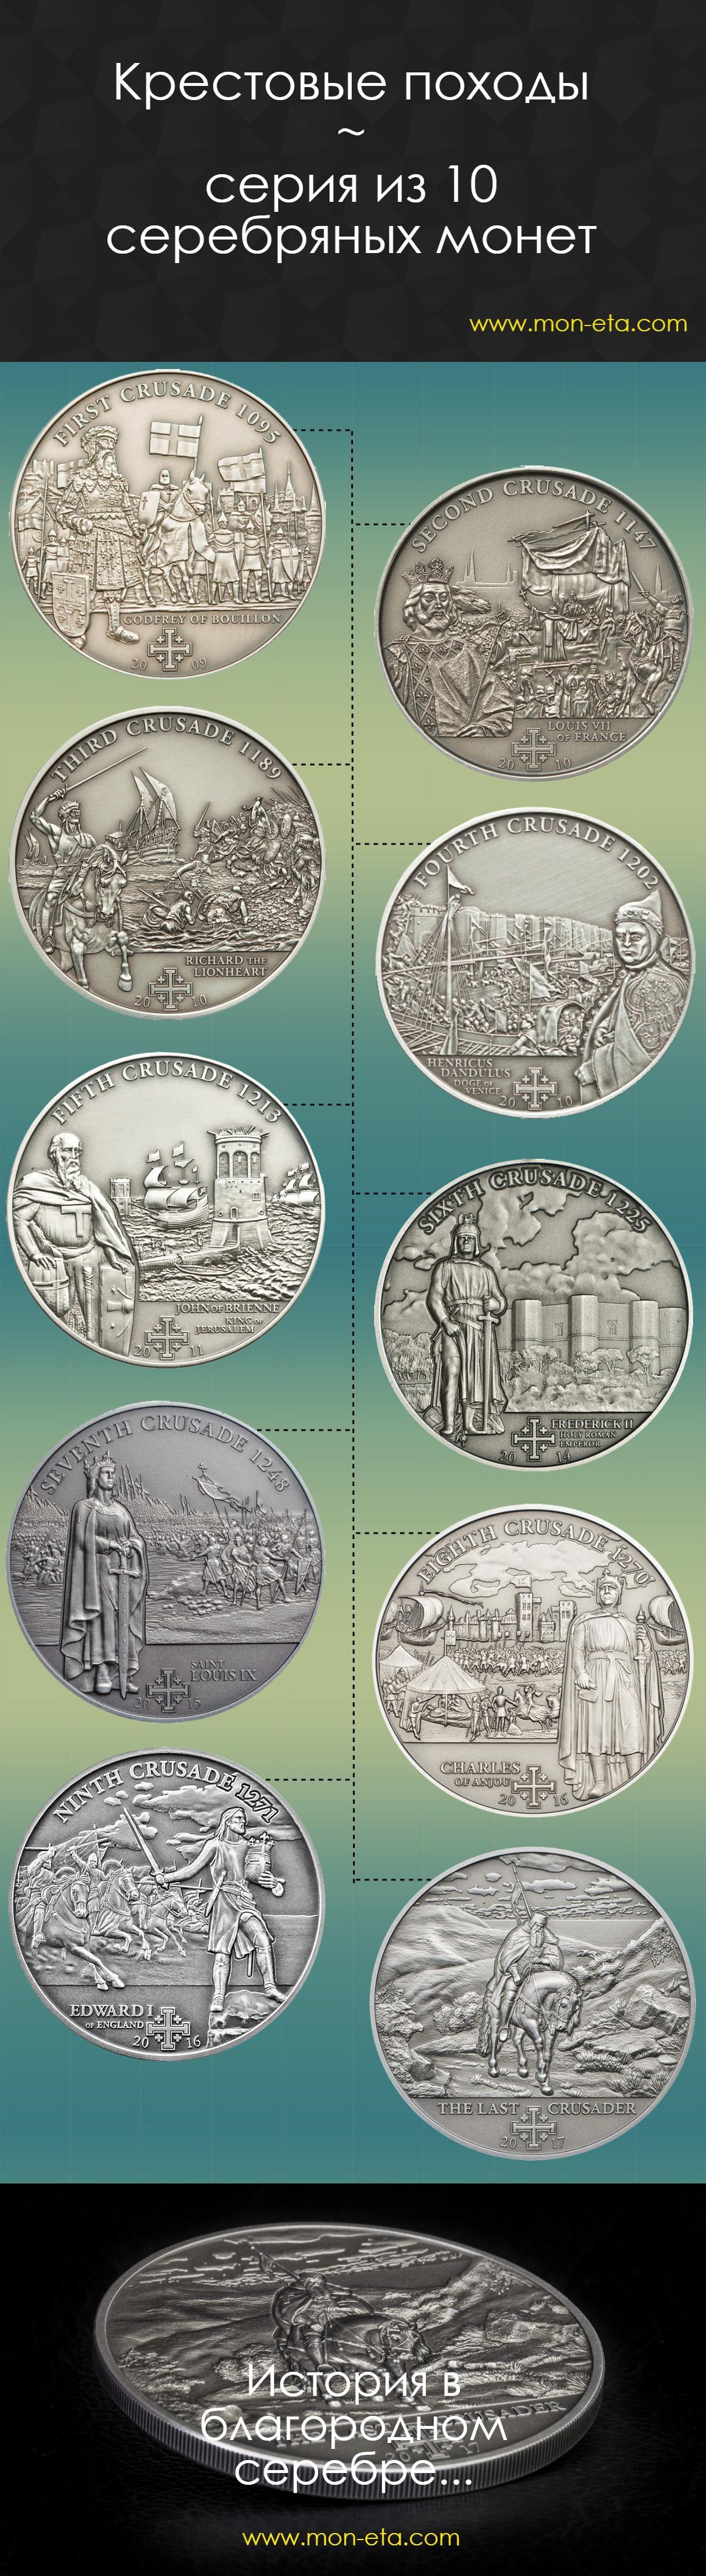 Crusades Silver Coins Series